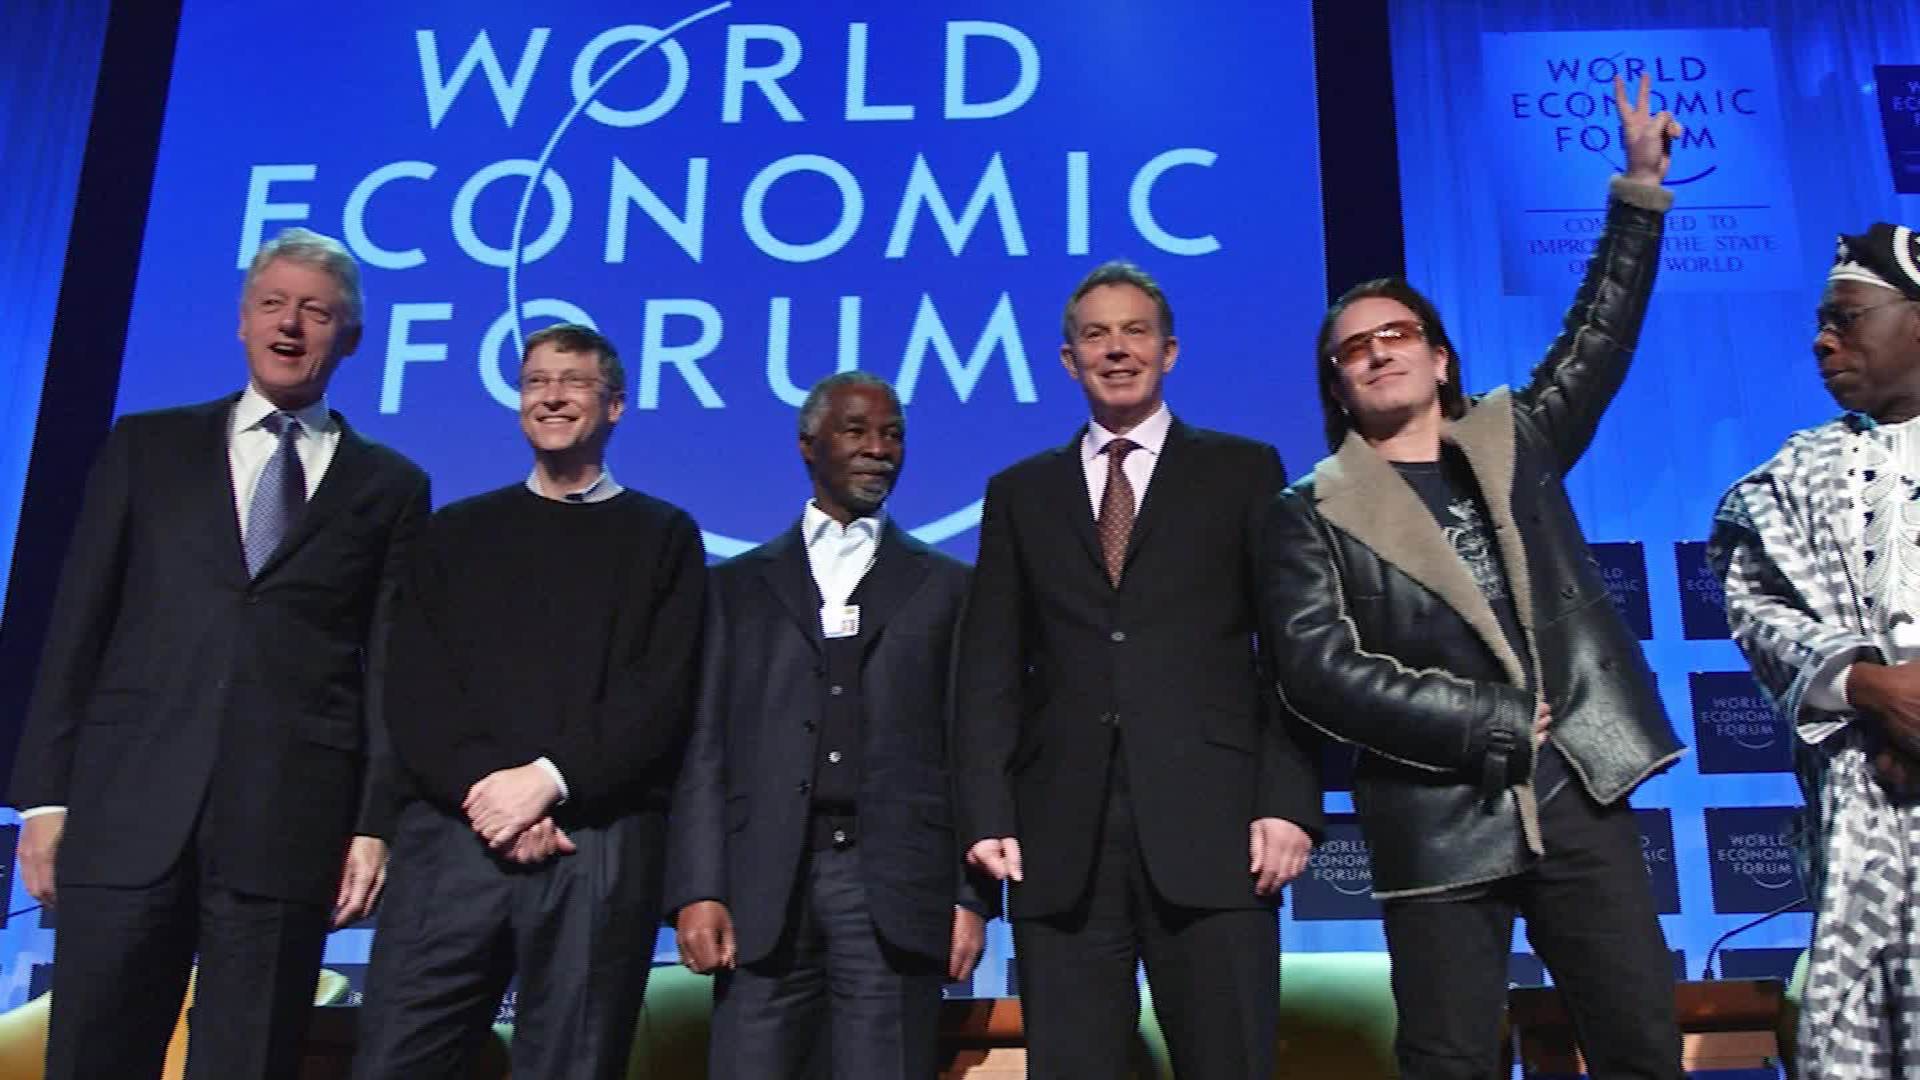 World Economic Forum: 50 years in 50 seconds - CNN Video